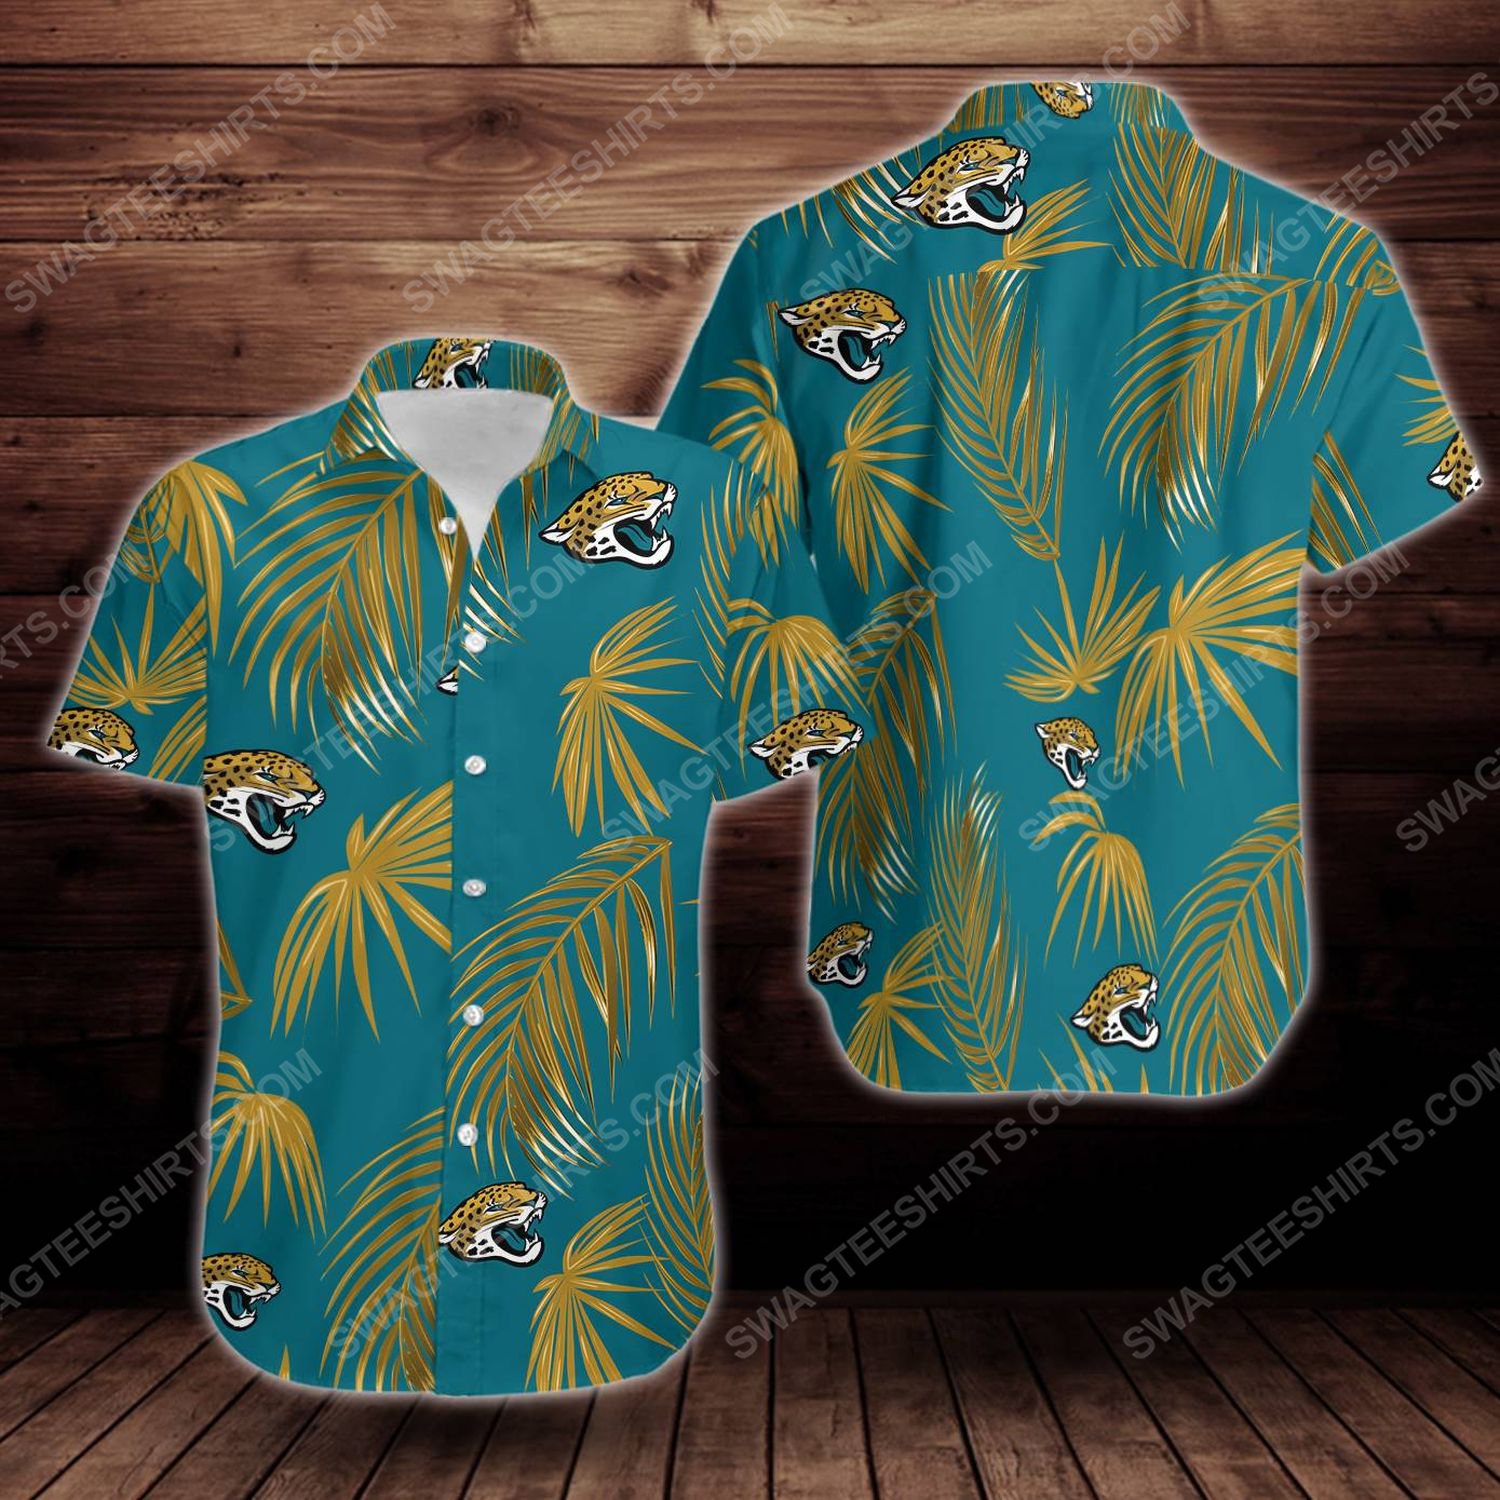 Tropical summer jacksonville jaguars short sleeve hawaiian shirt 2 - Copy